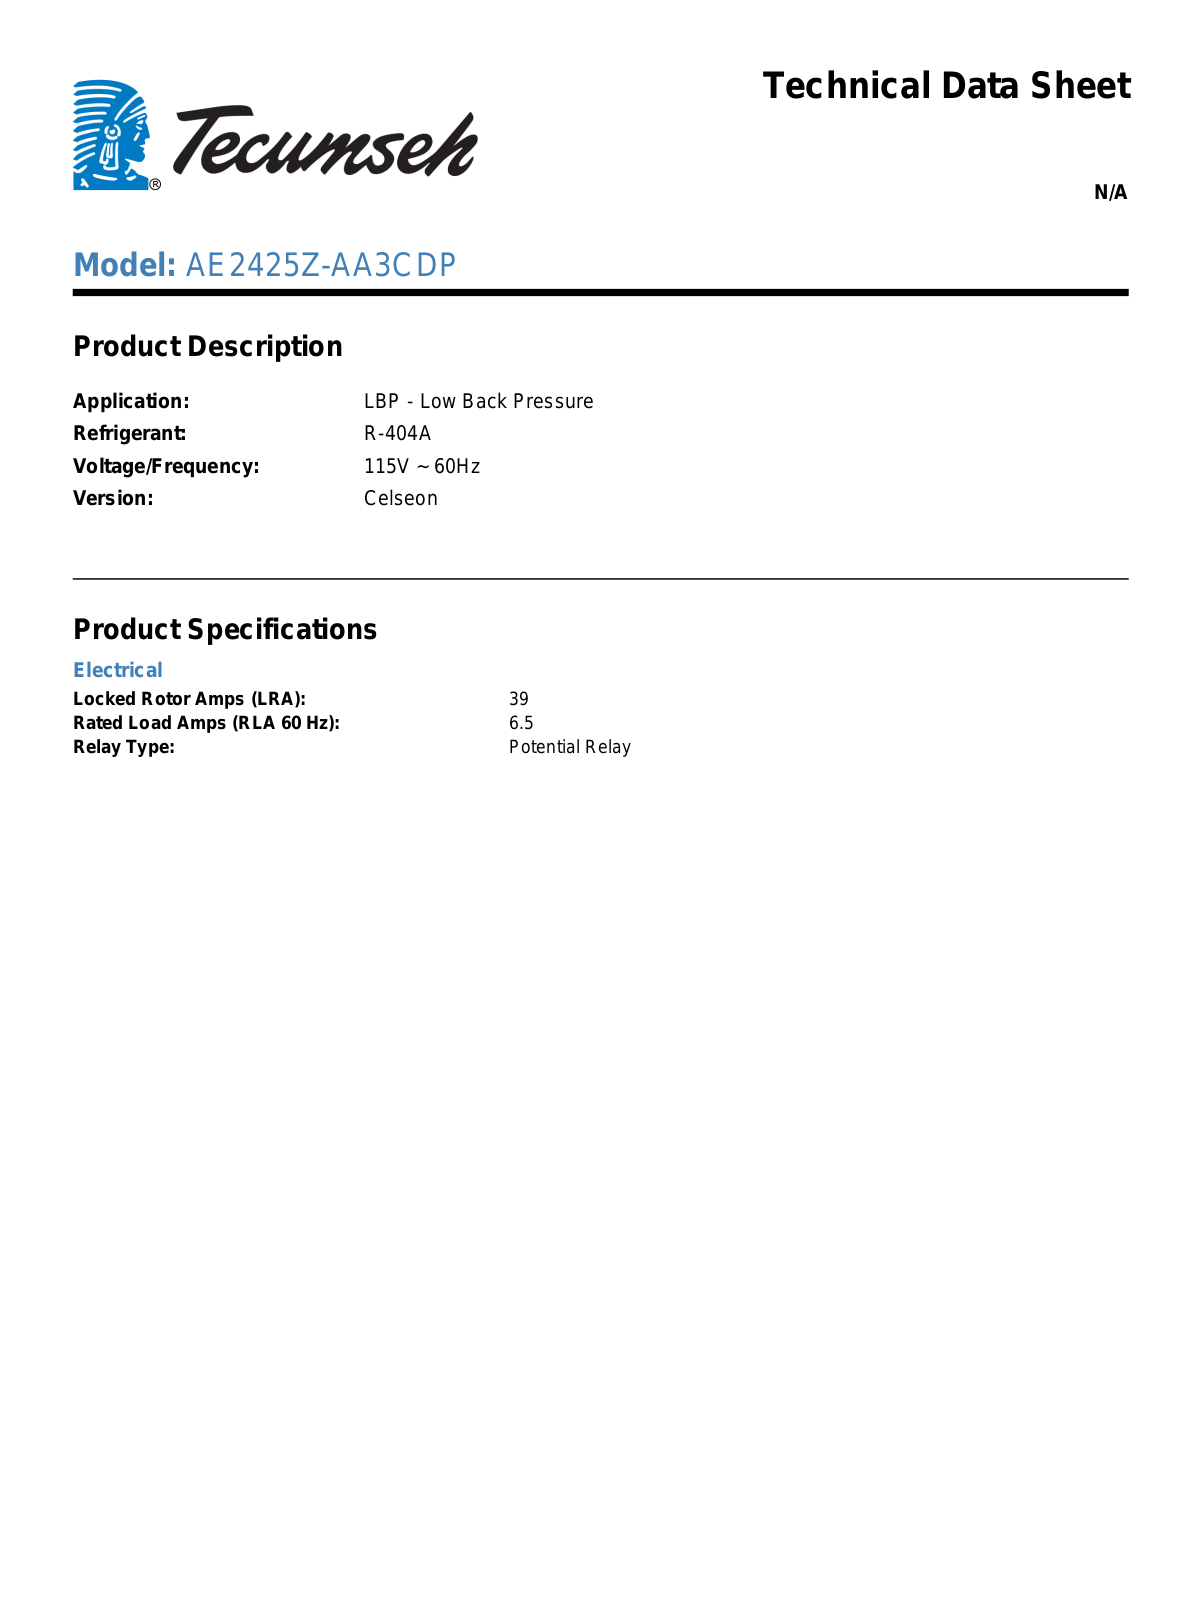 Tecumseh AE2425Z-AA3CDP User Manual